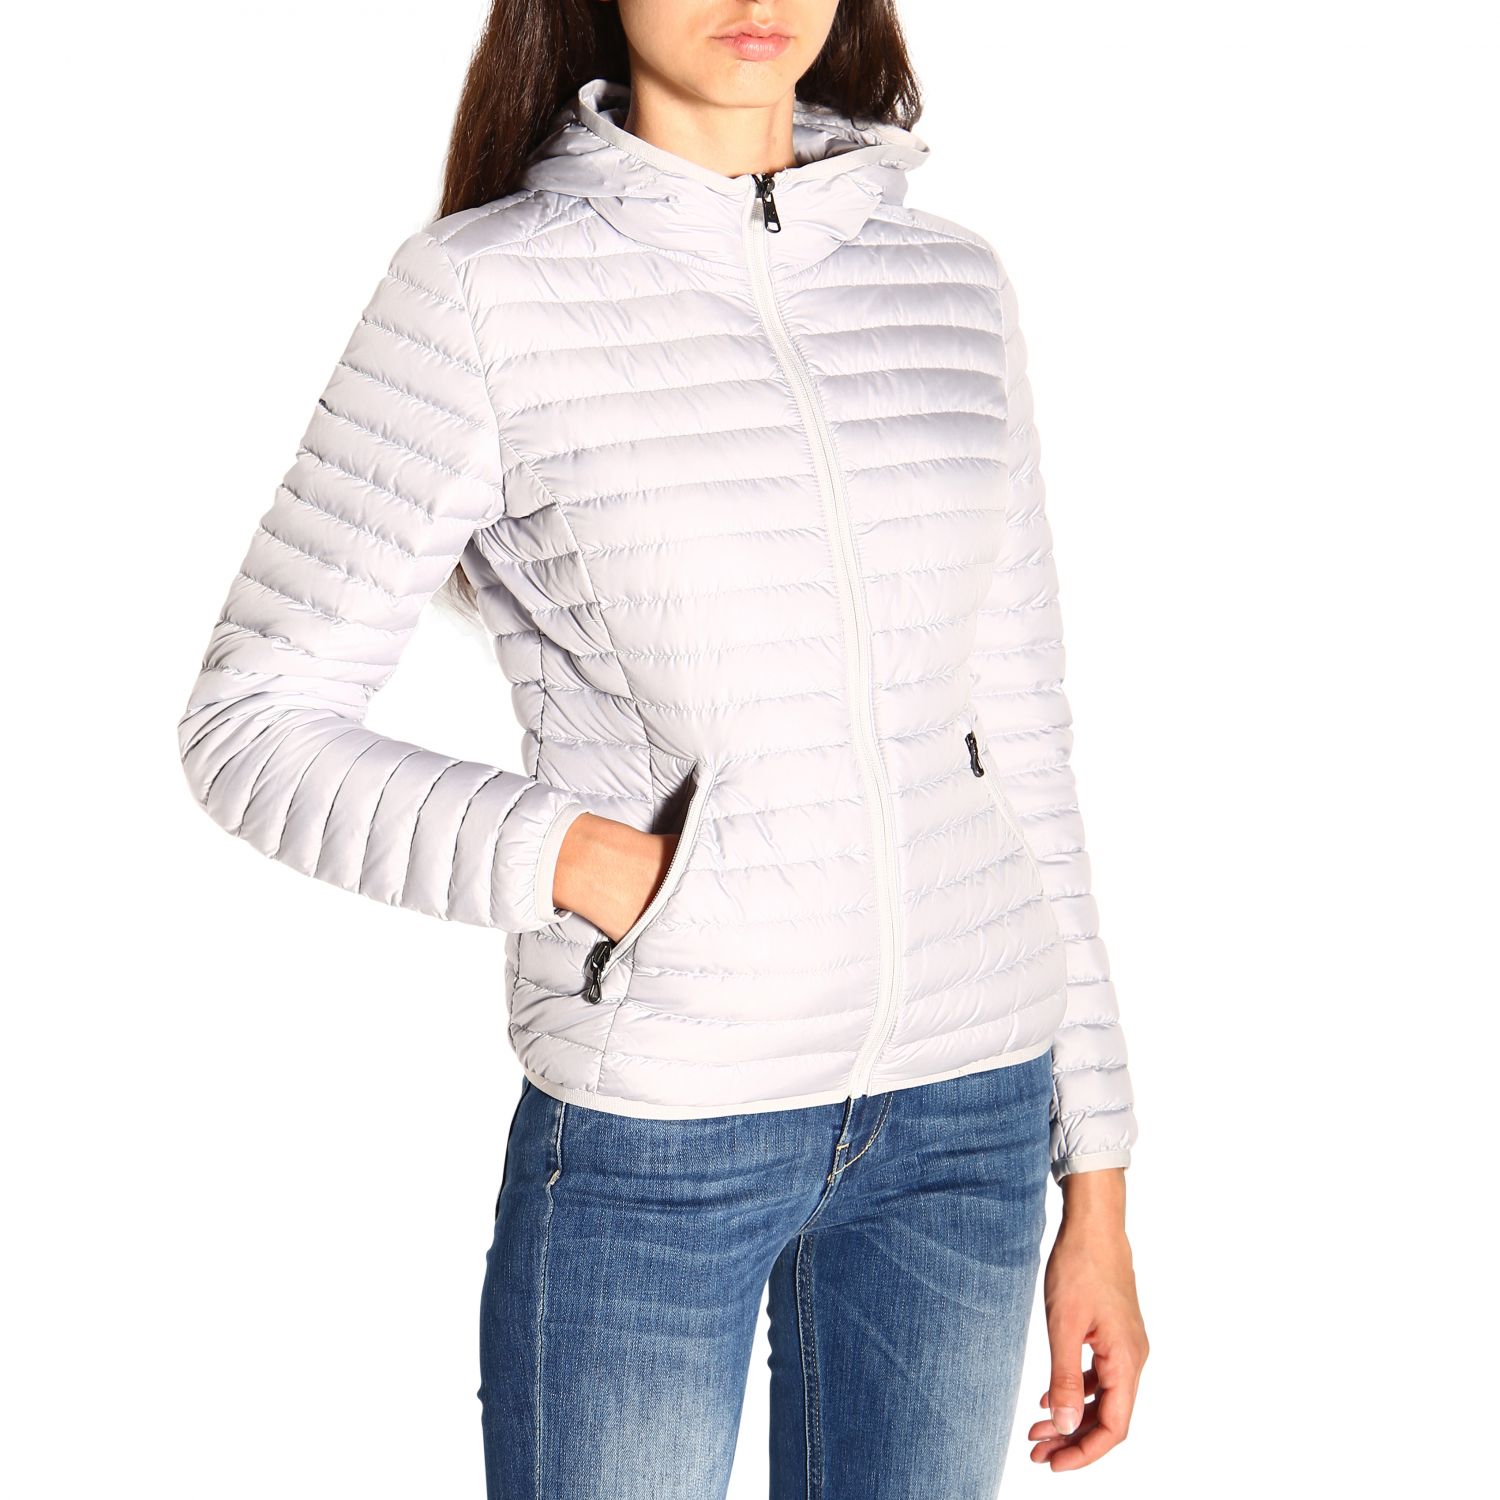 Colmar Outlet: jacket for women - Ice | Colmar jacket 2224R 8RQ online ...